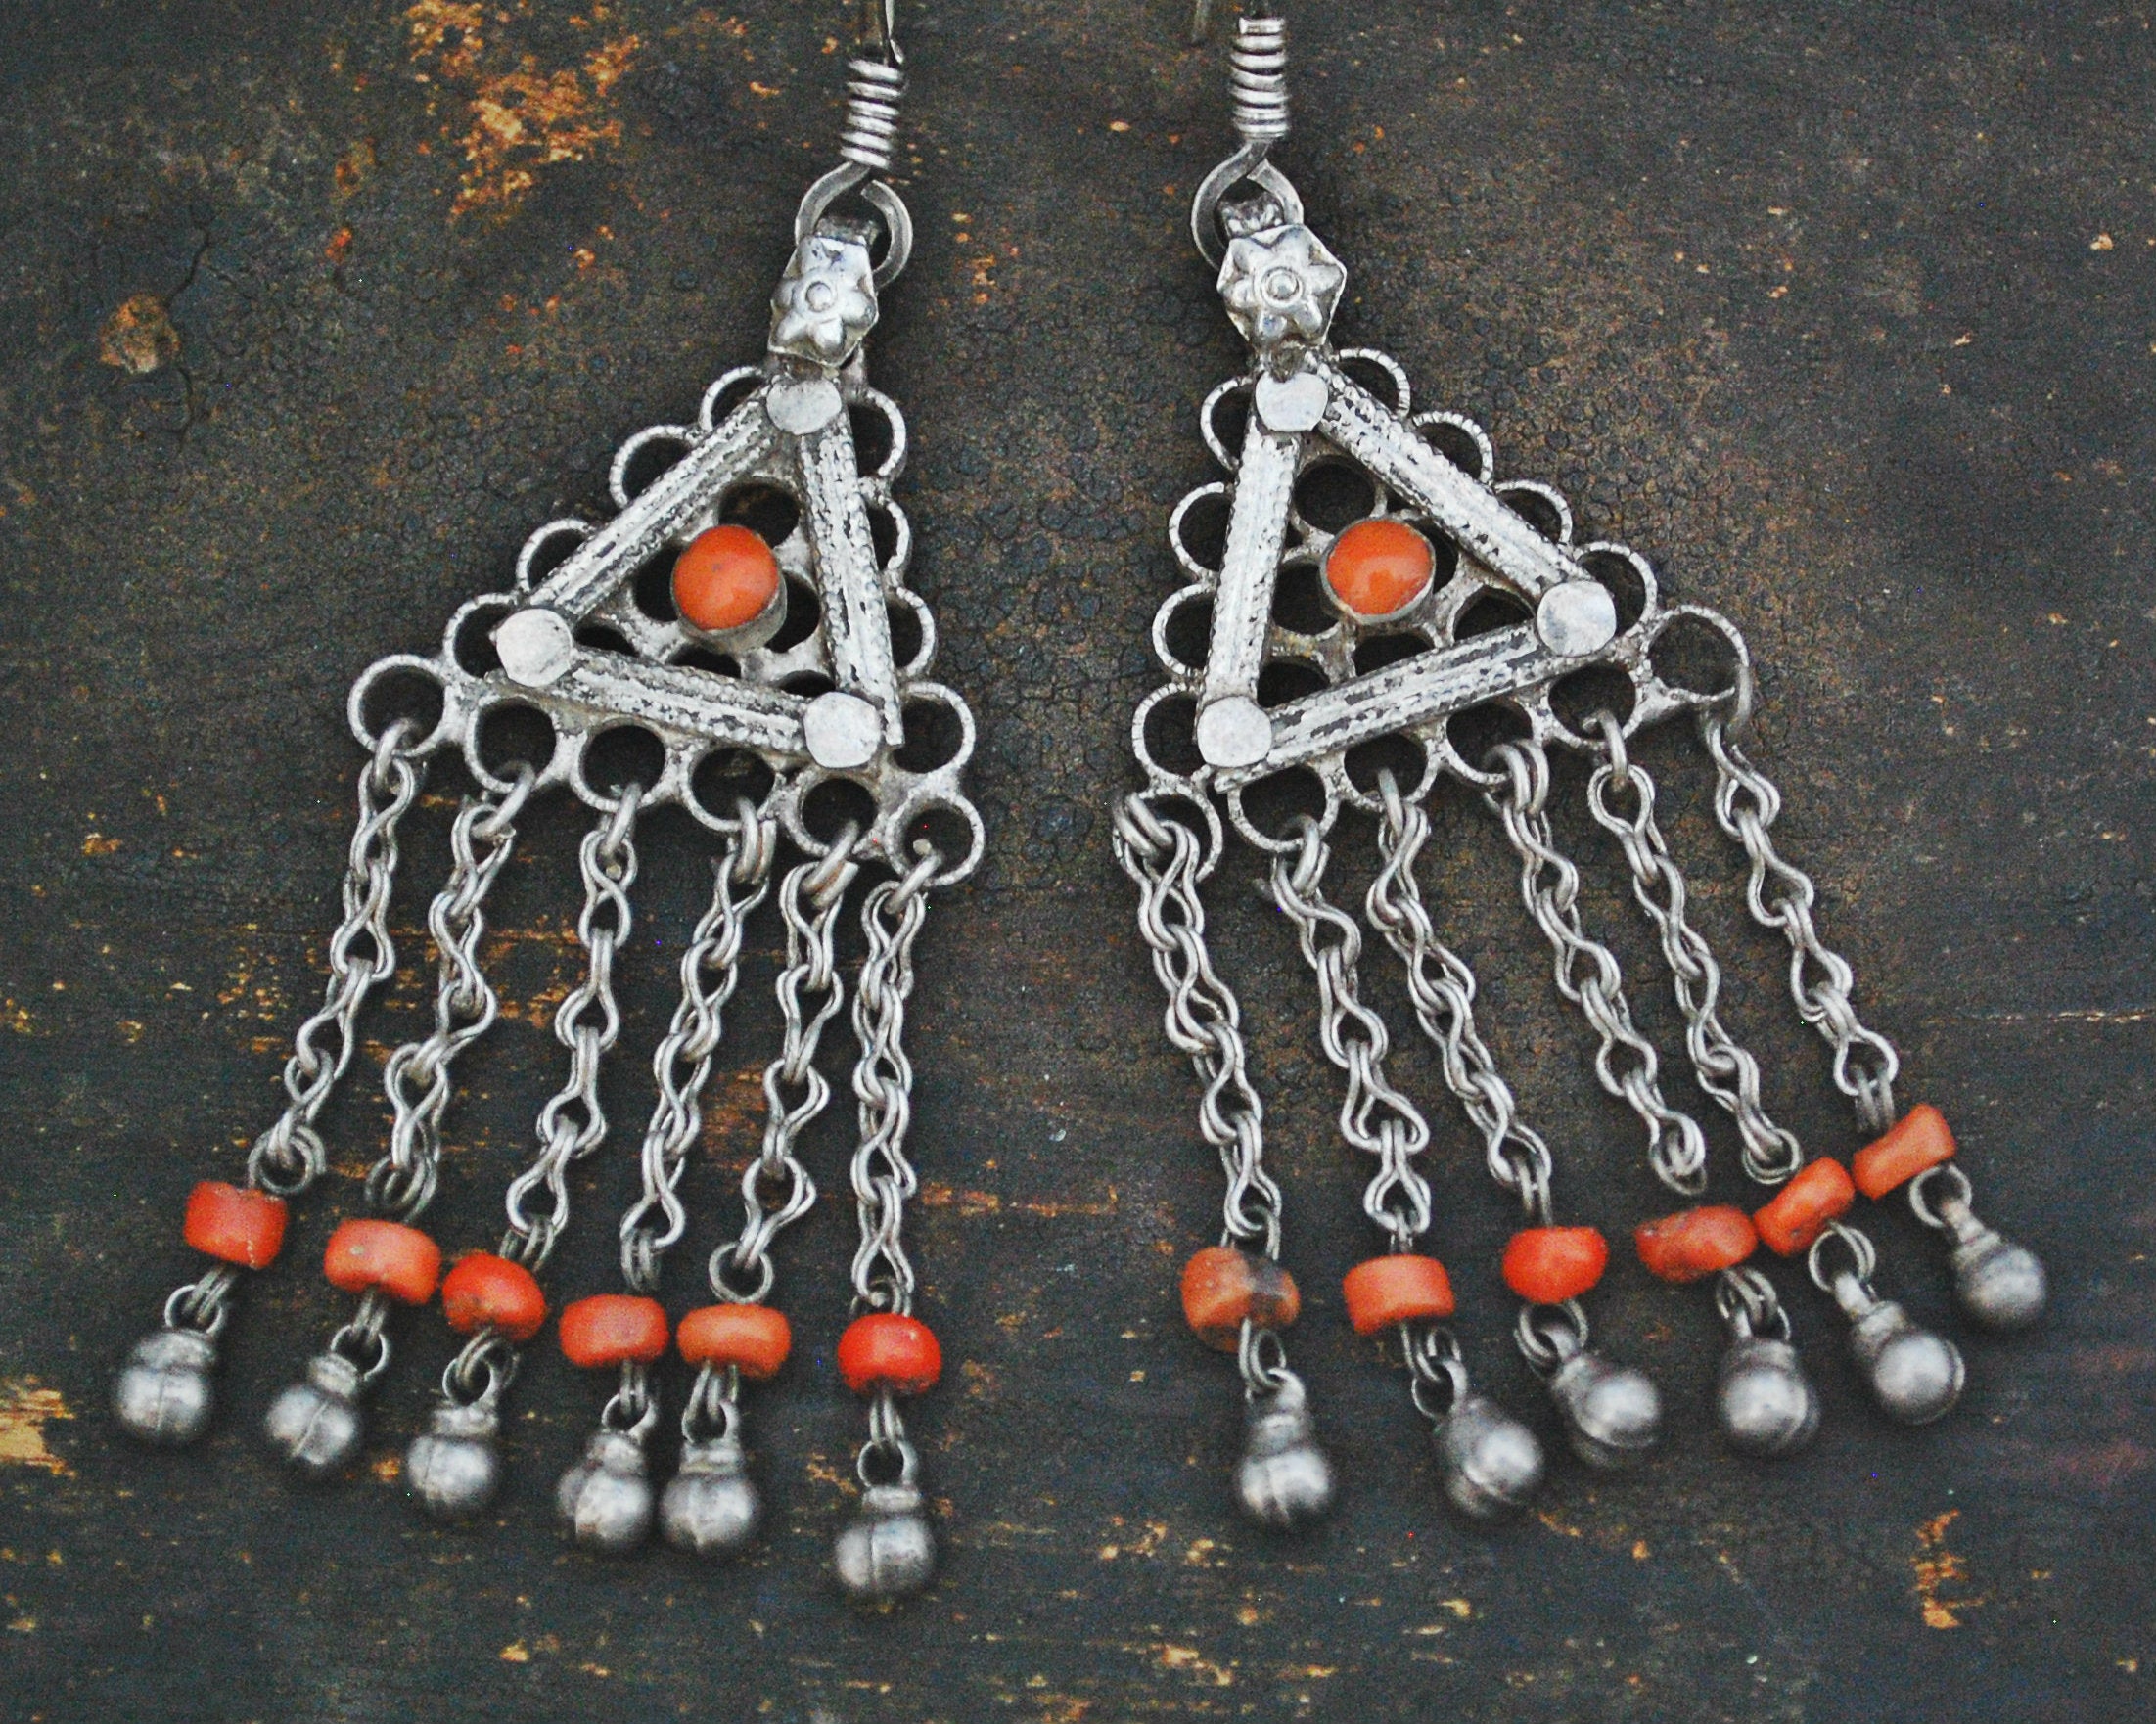 Uzbek Coral Earrings with Bell Dangles